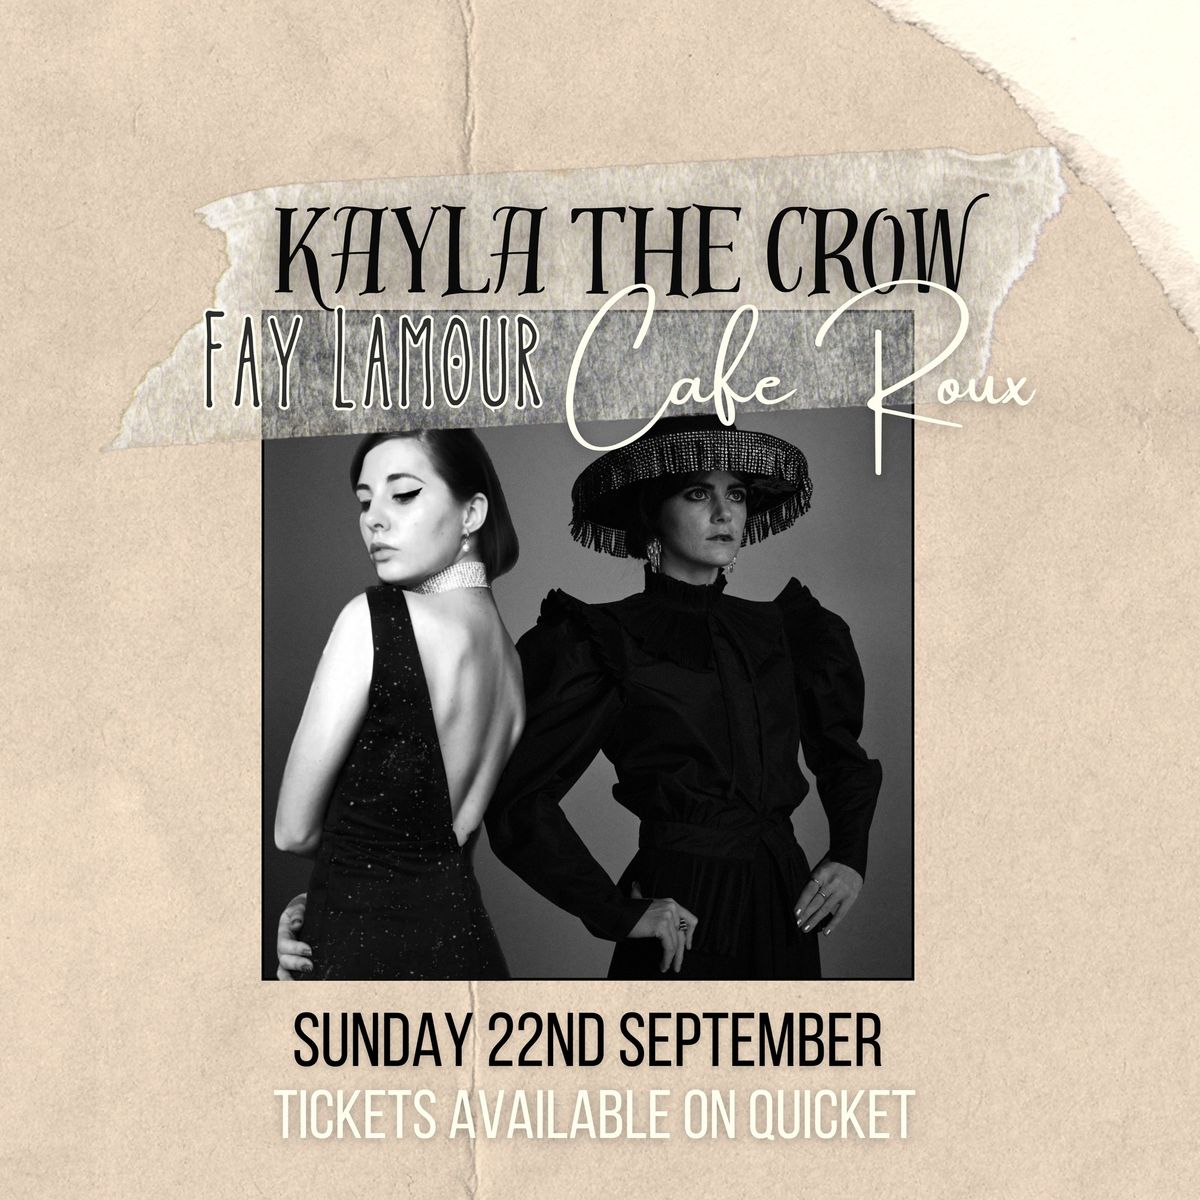 Kayla the Crow & Fay Lamour